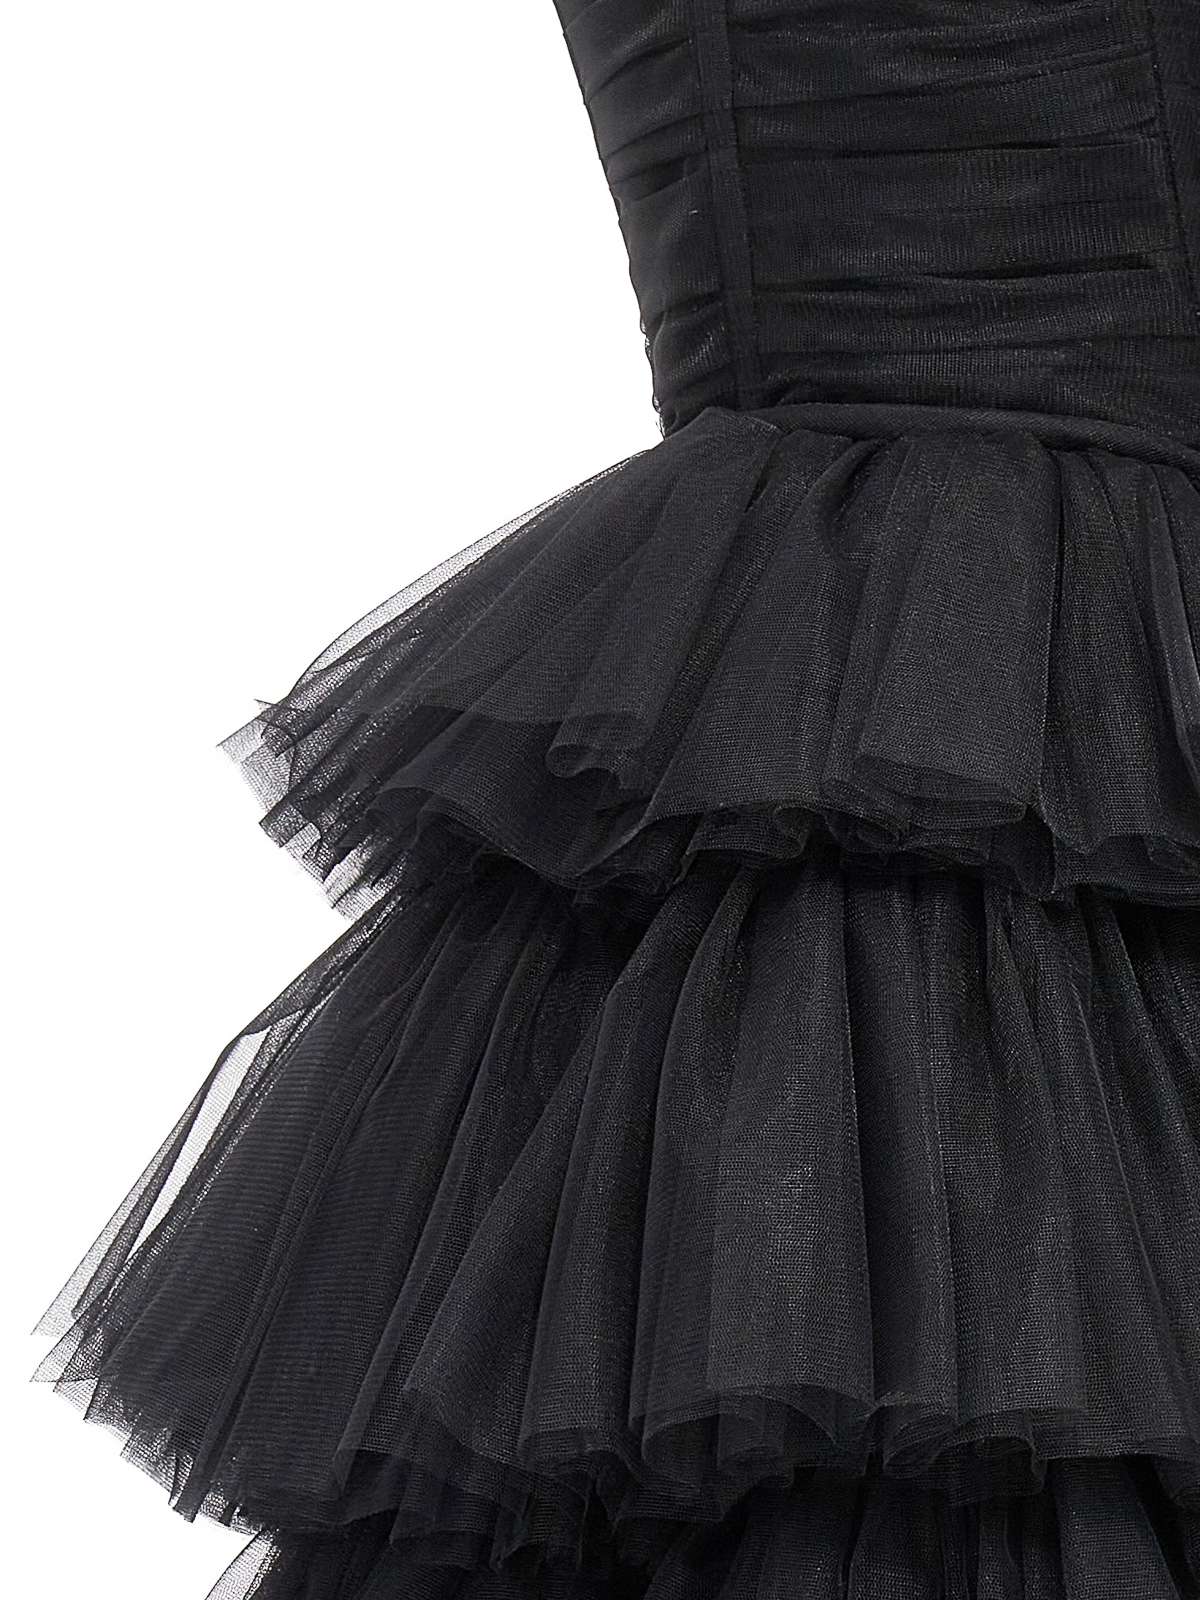 Shop 19:13 Dresscode Vestido Midi - Negro